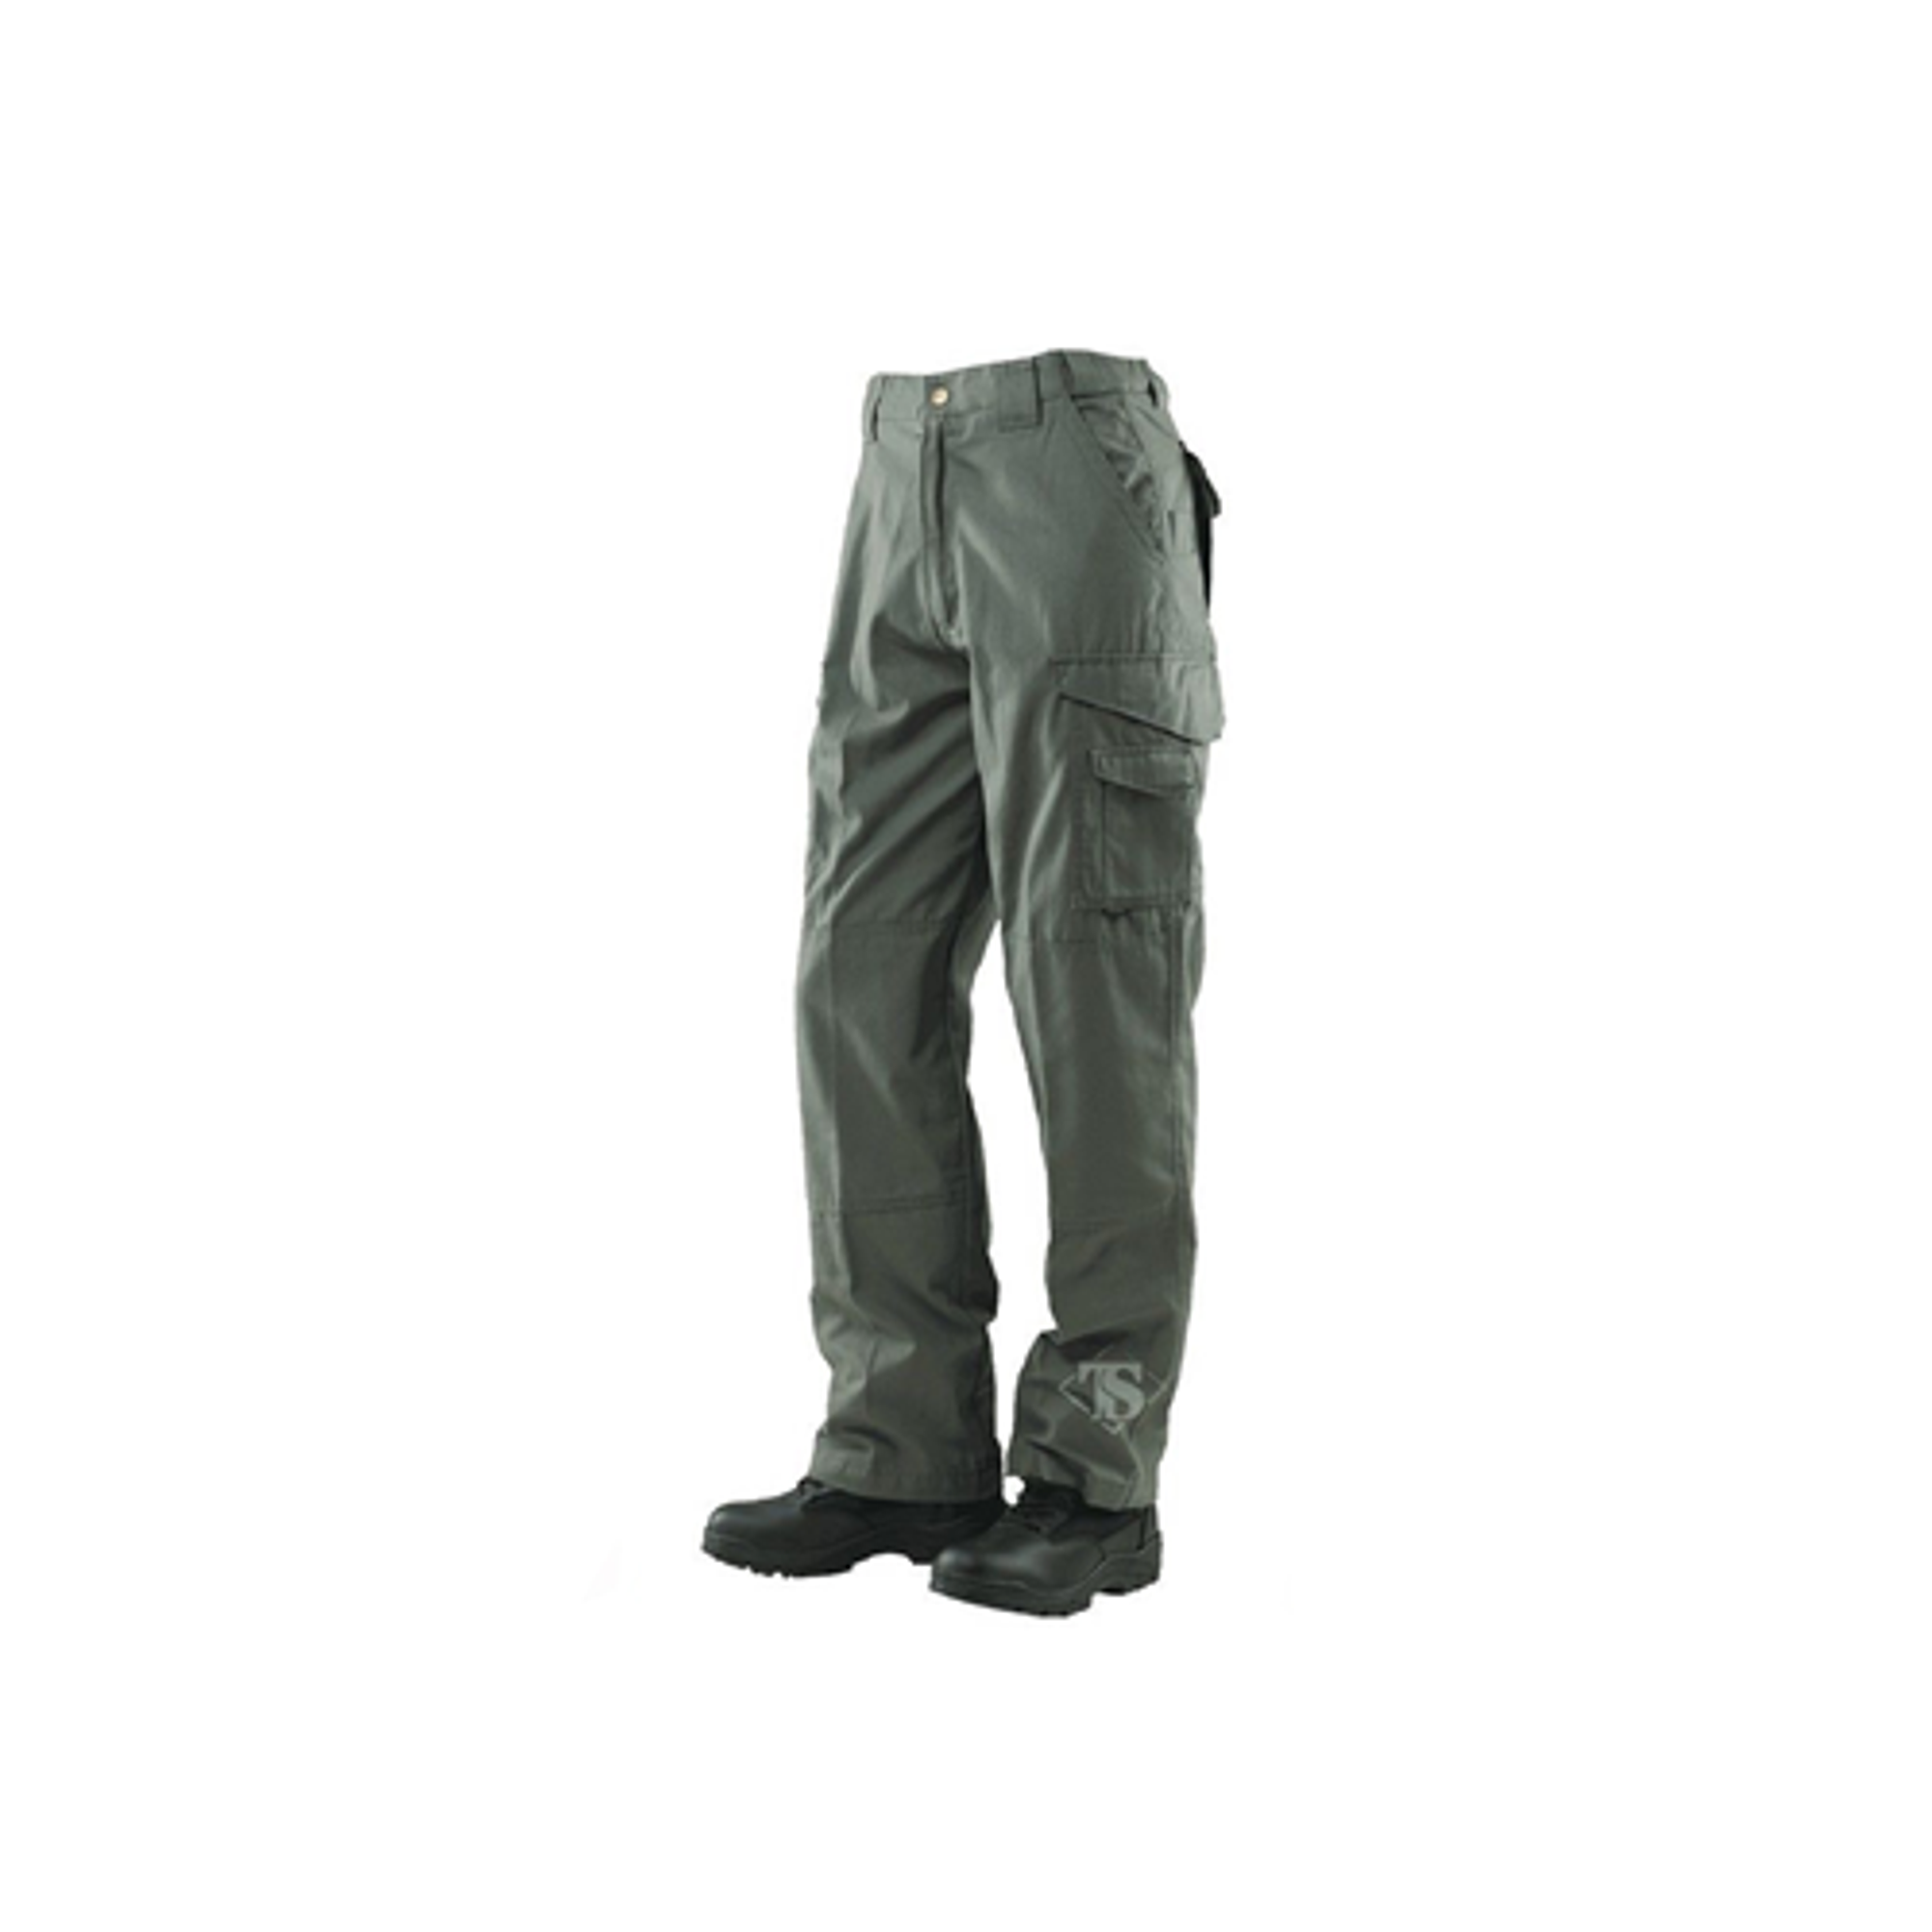 24-7 Original Tactical Pants - 6.5oz - Od Green - KRTSP-1064026